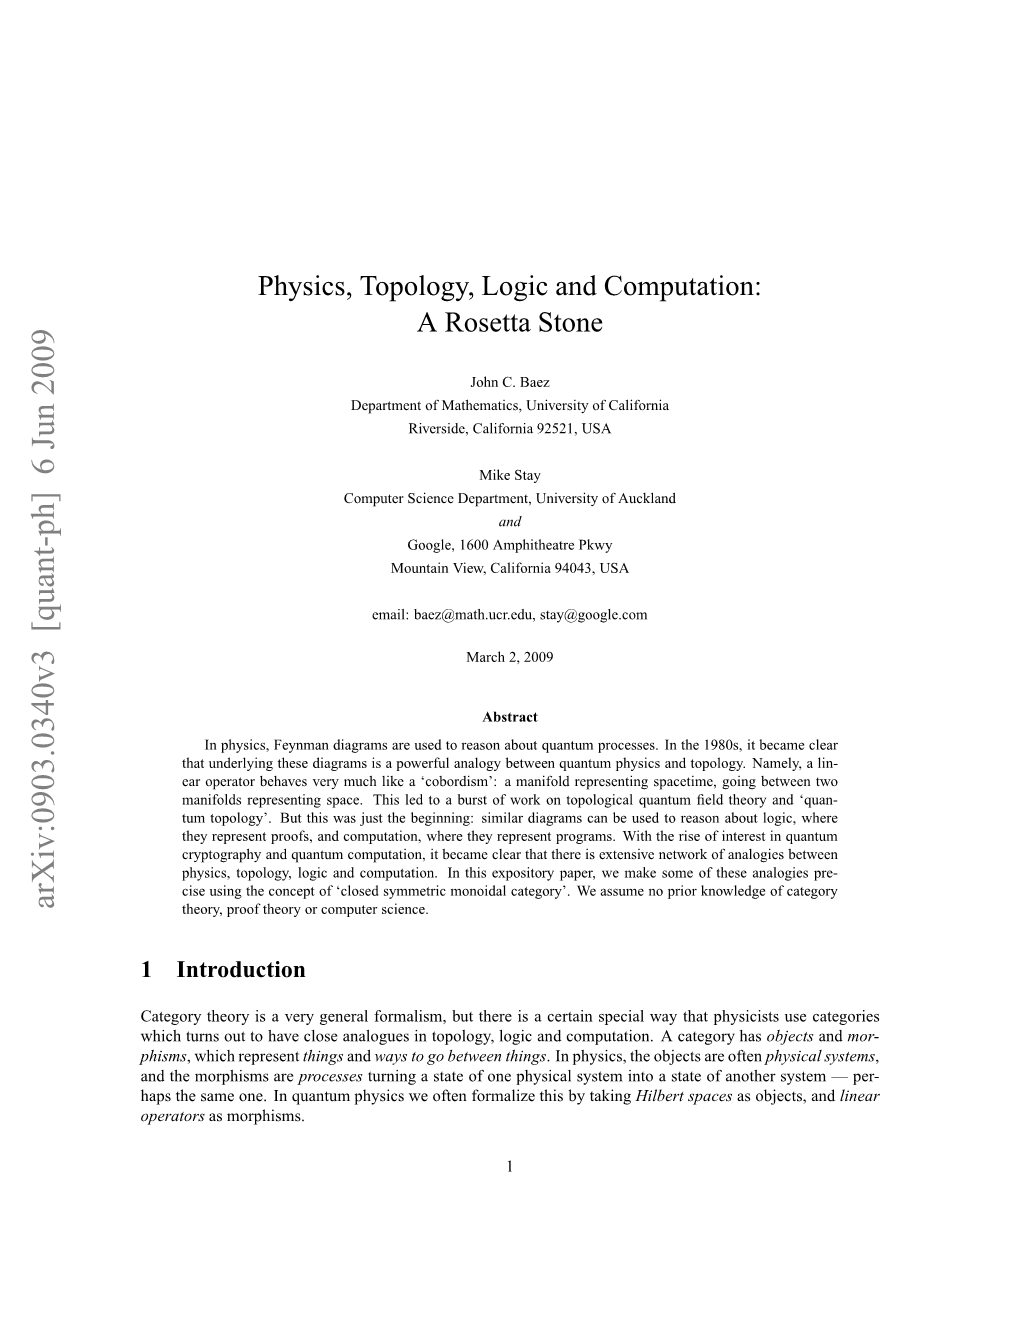 Physics, Topology, Logic and Computation: a Rosetta Stone